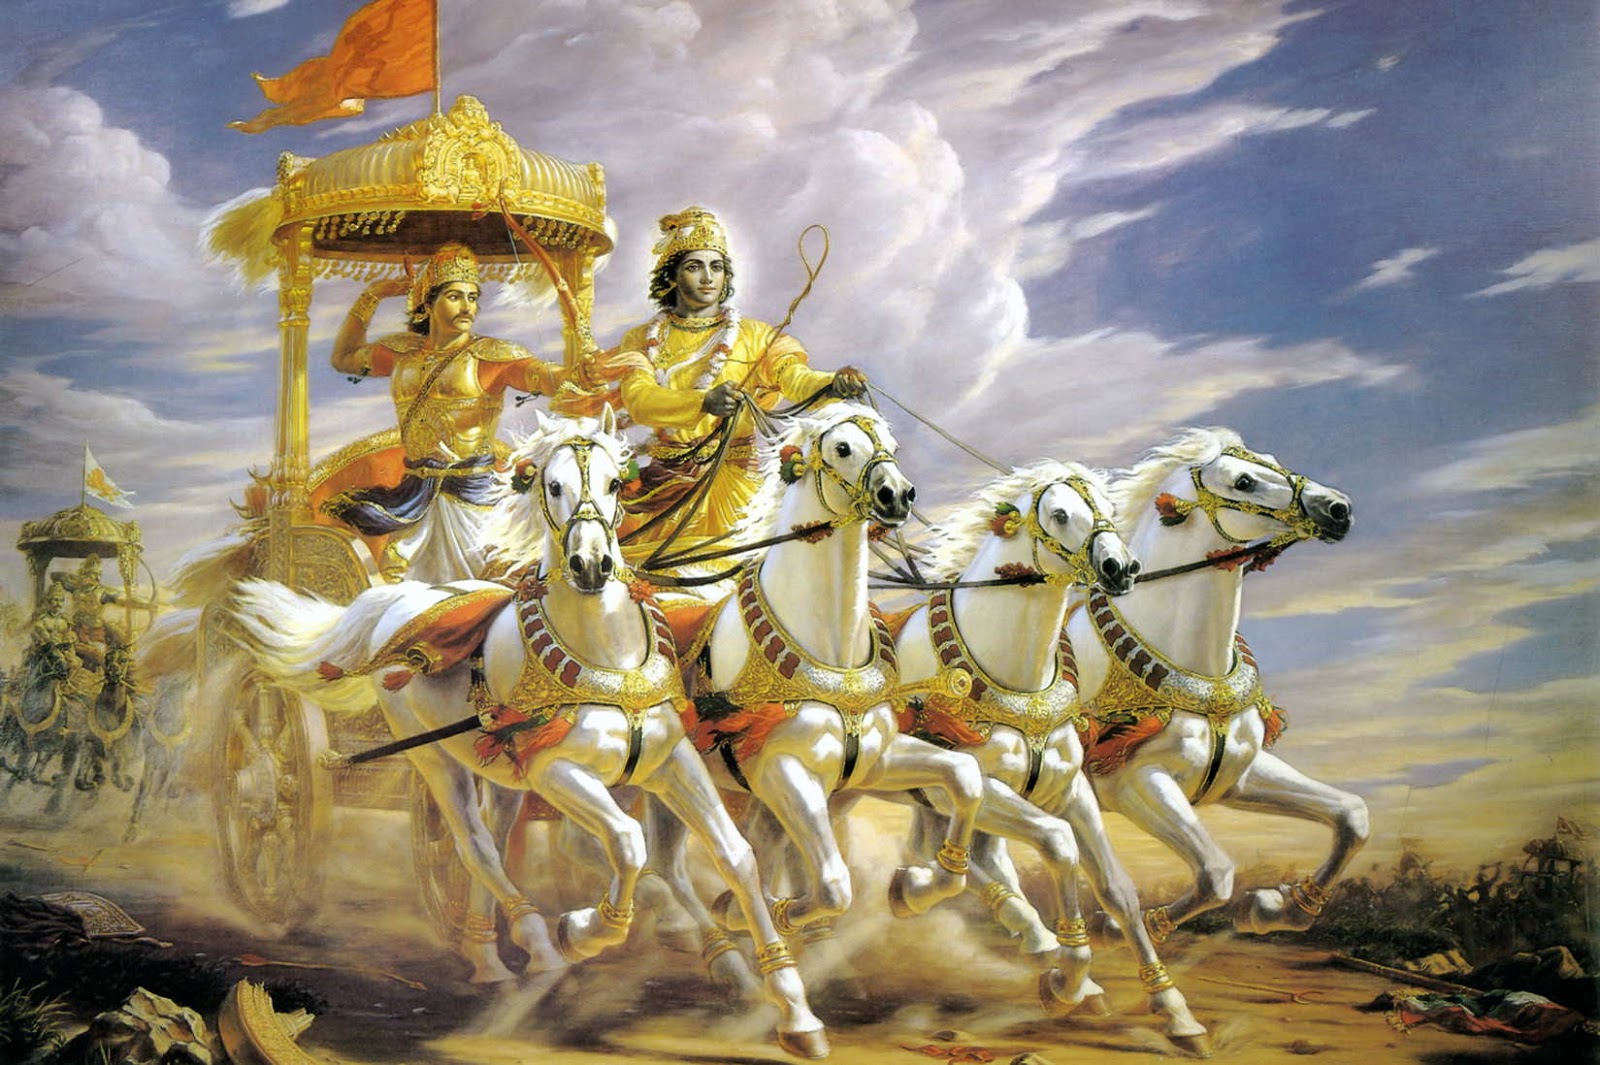 Krishna and Arjuna in the Bhagavad Gita